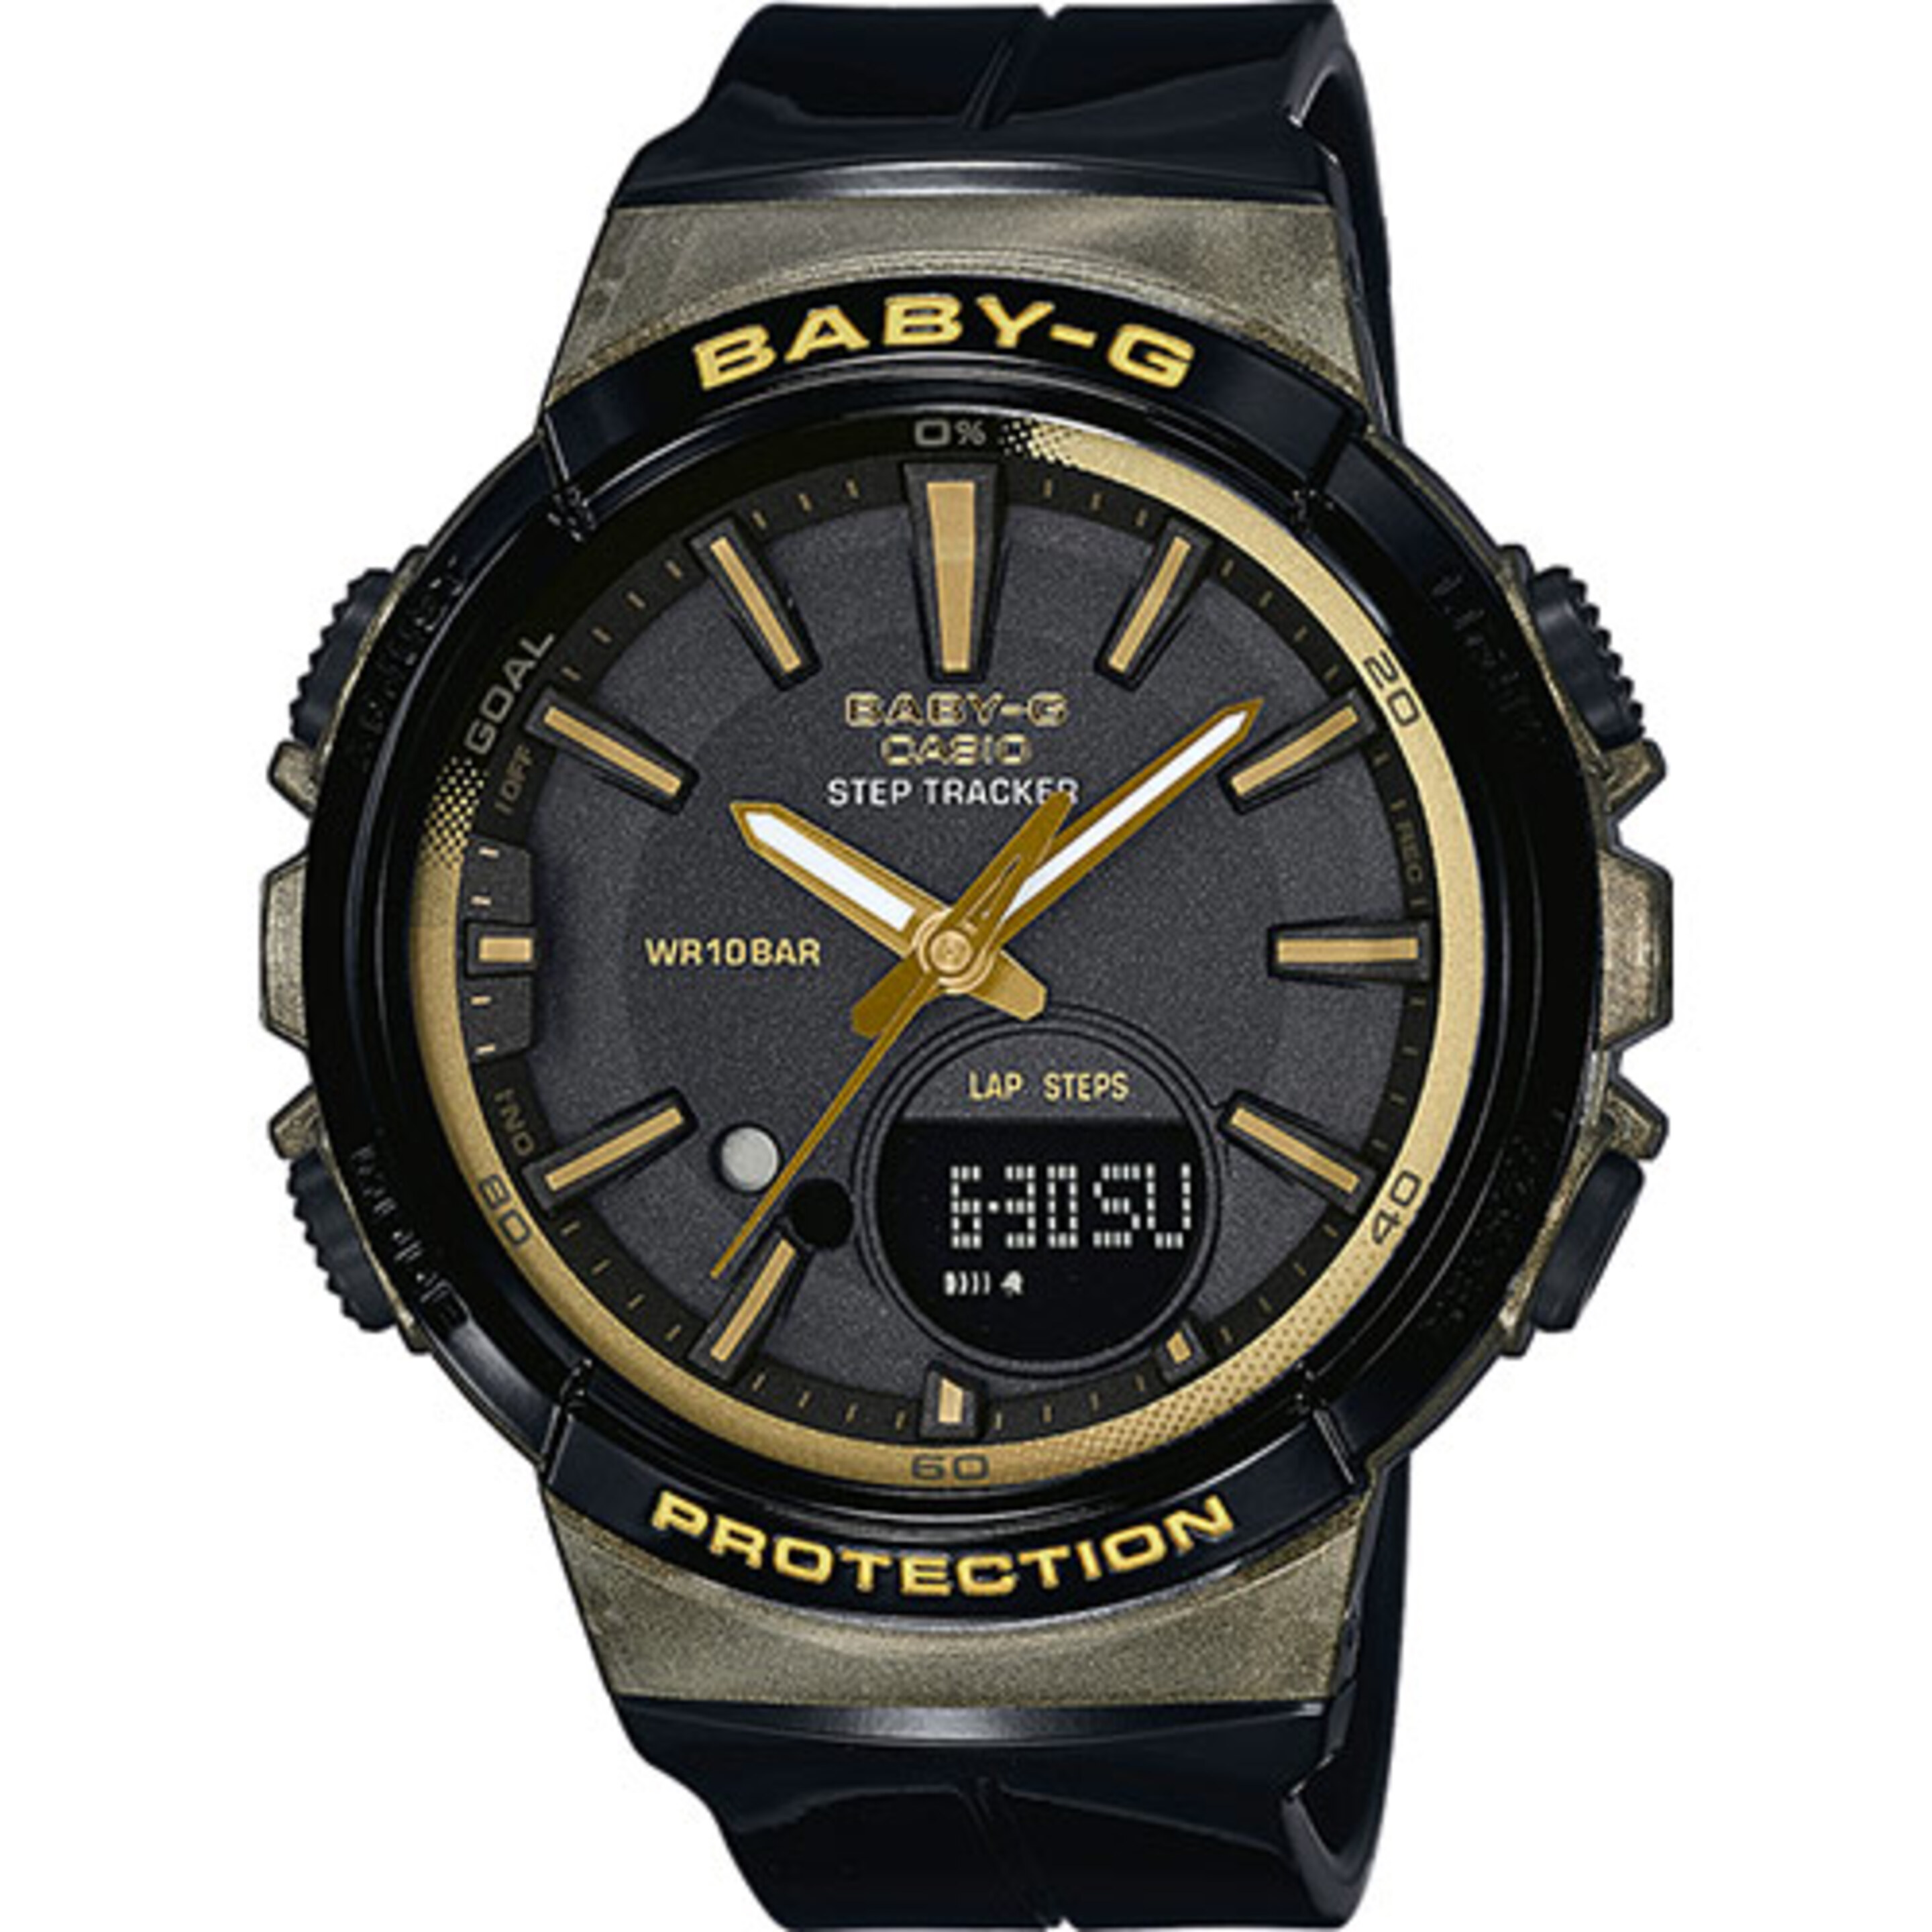 Reloj Casio Baby-g Bgs-100gs-1aer